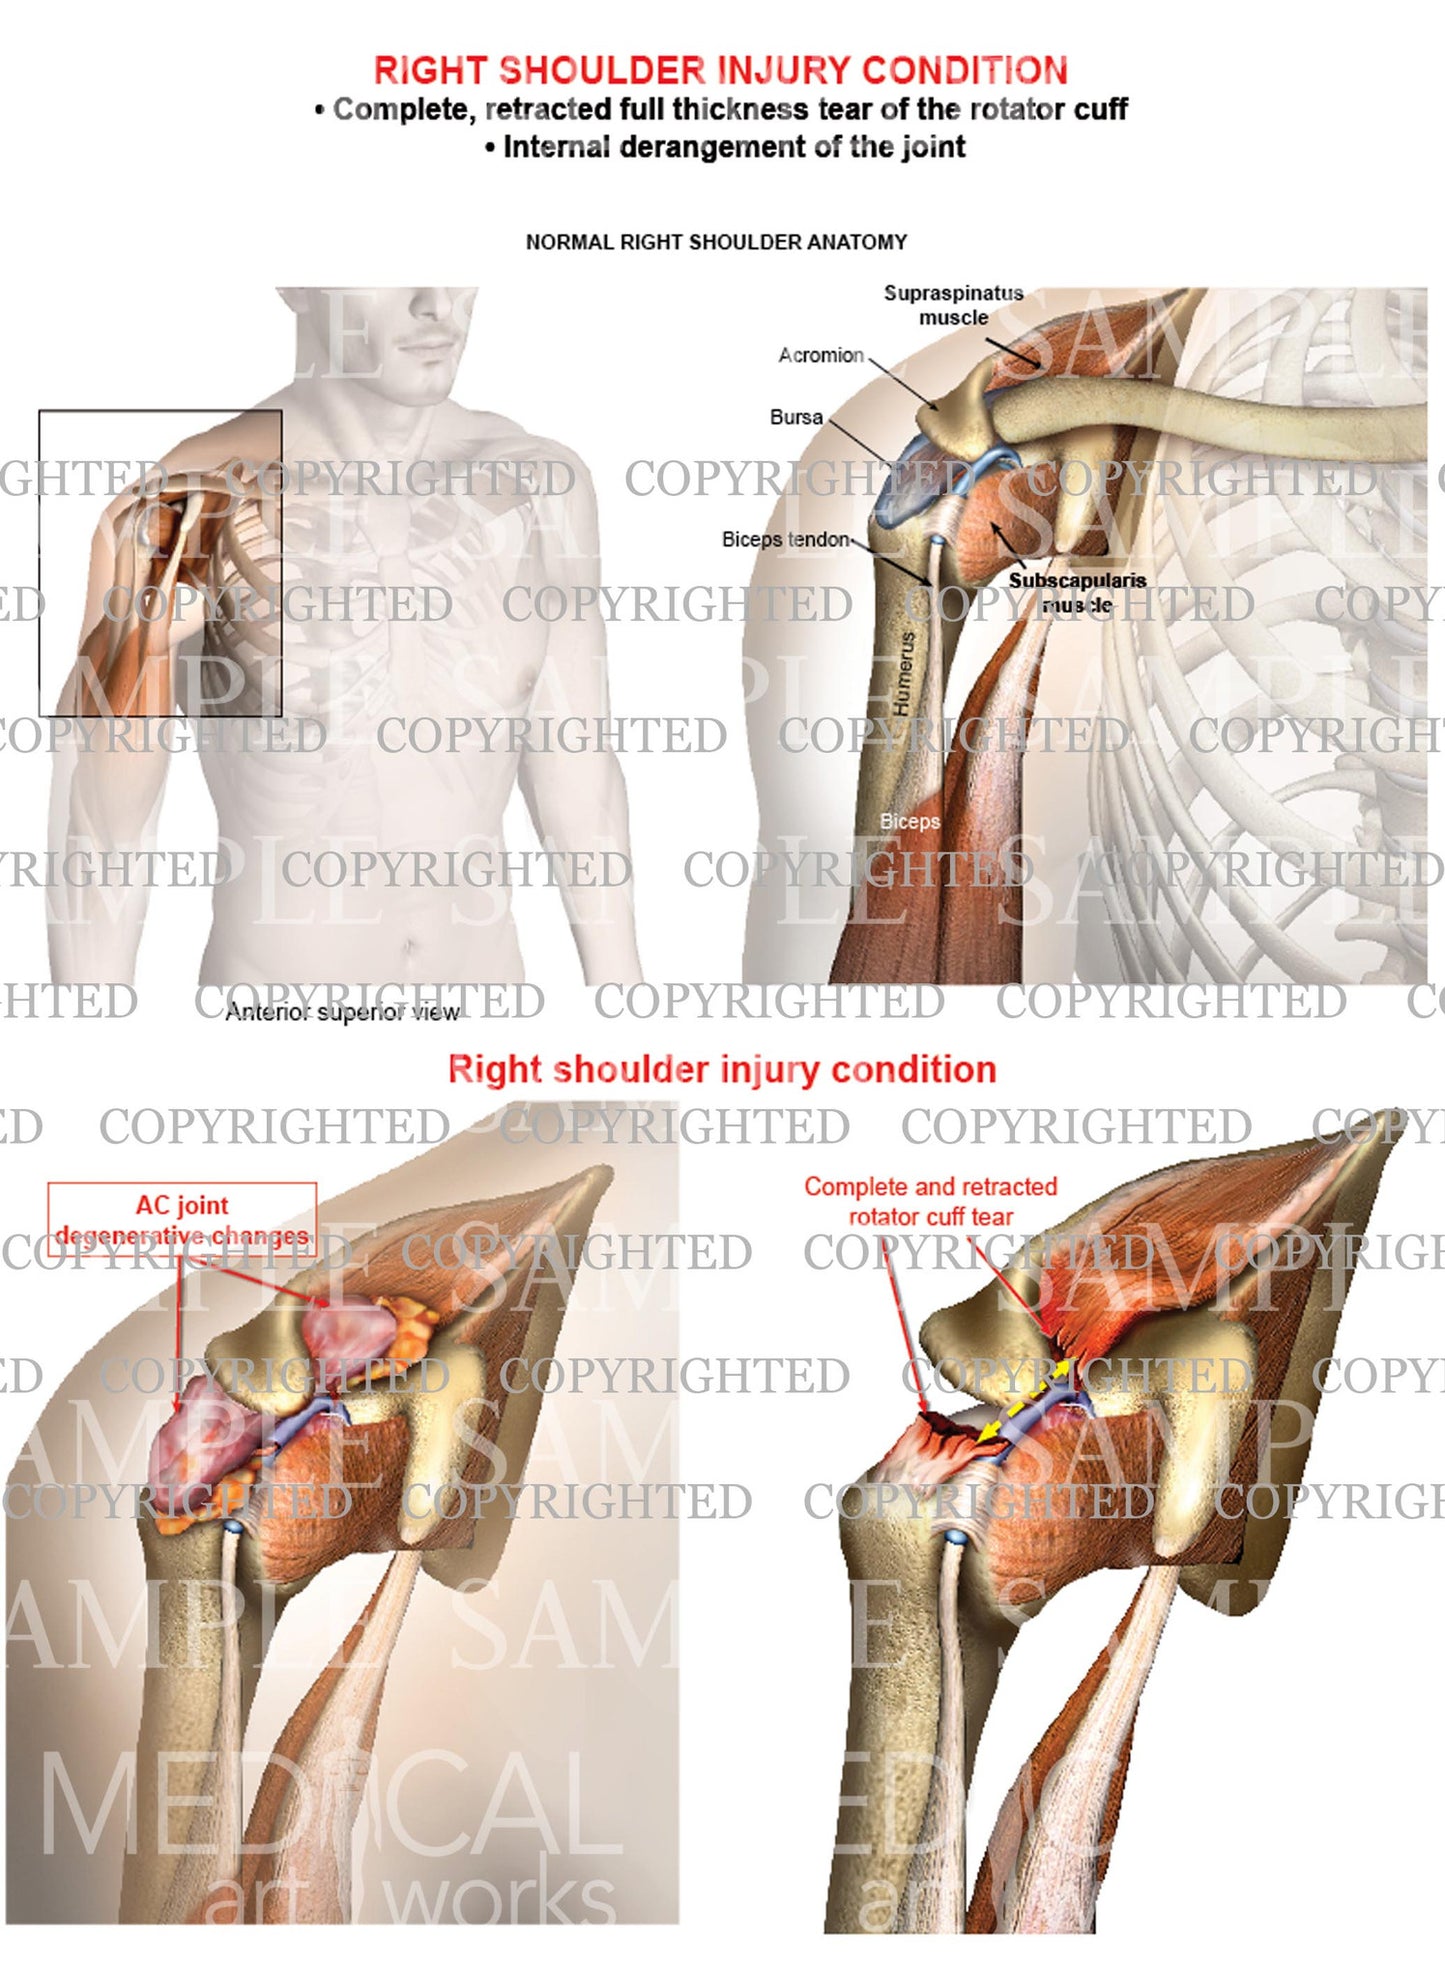 Right shoulder rotator cuff complete retracted tear - Internal derangement - Male